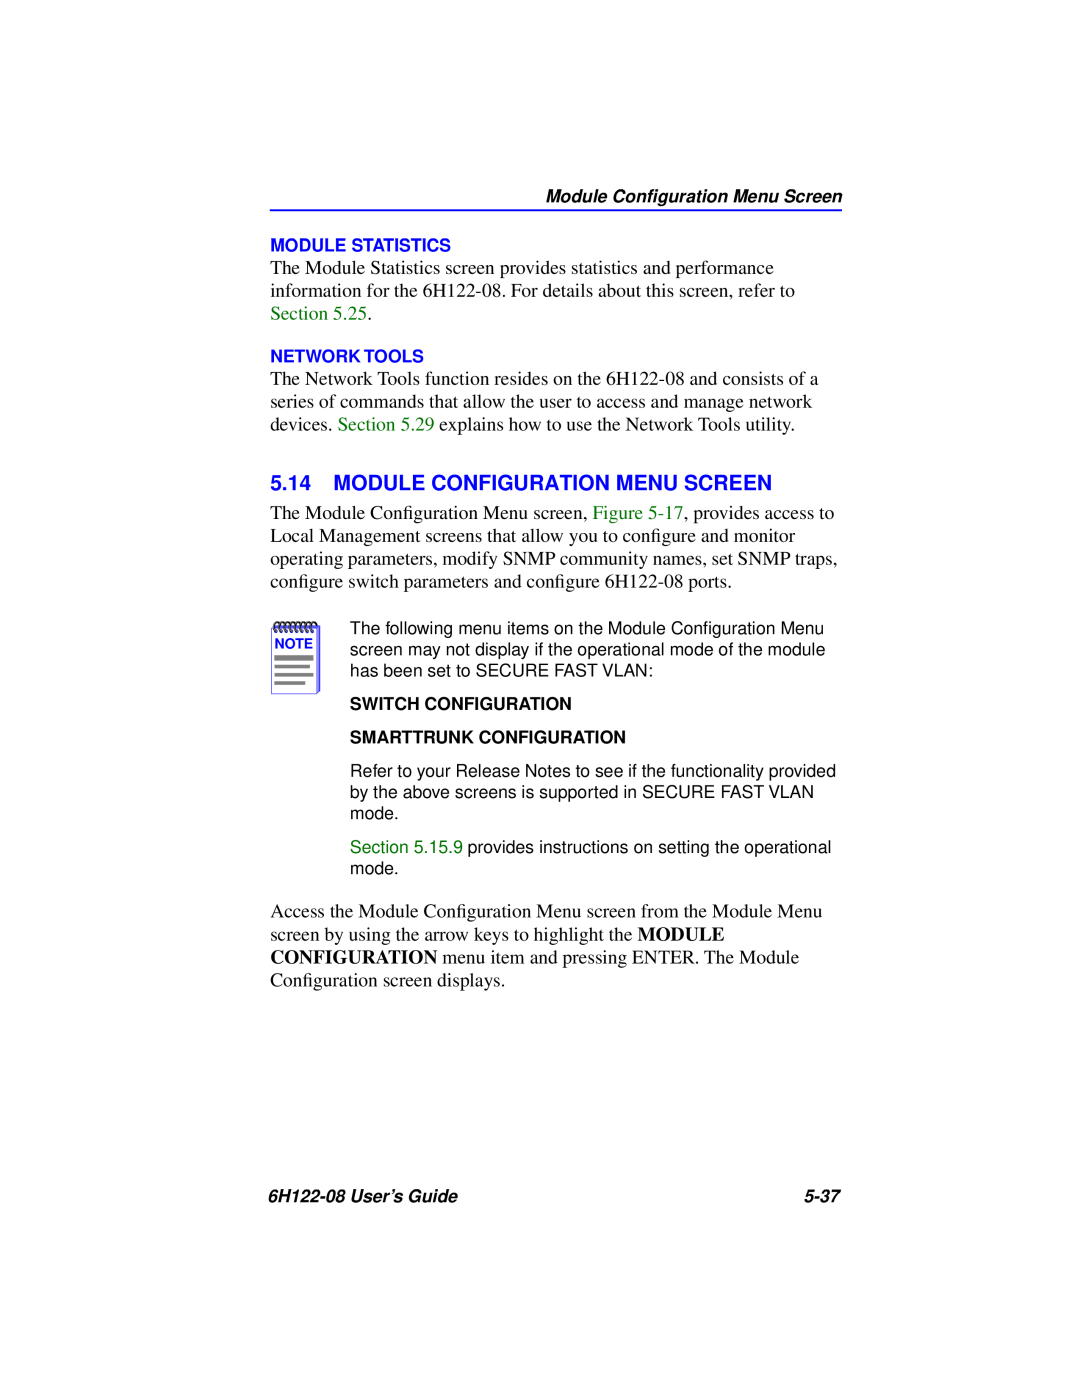 Cabletron Systems 6H122-08 manual Module Configuration Menu Screen, Module Statistics, Network Tools 